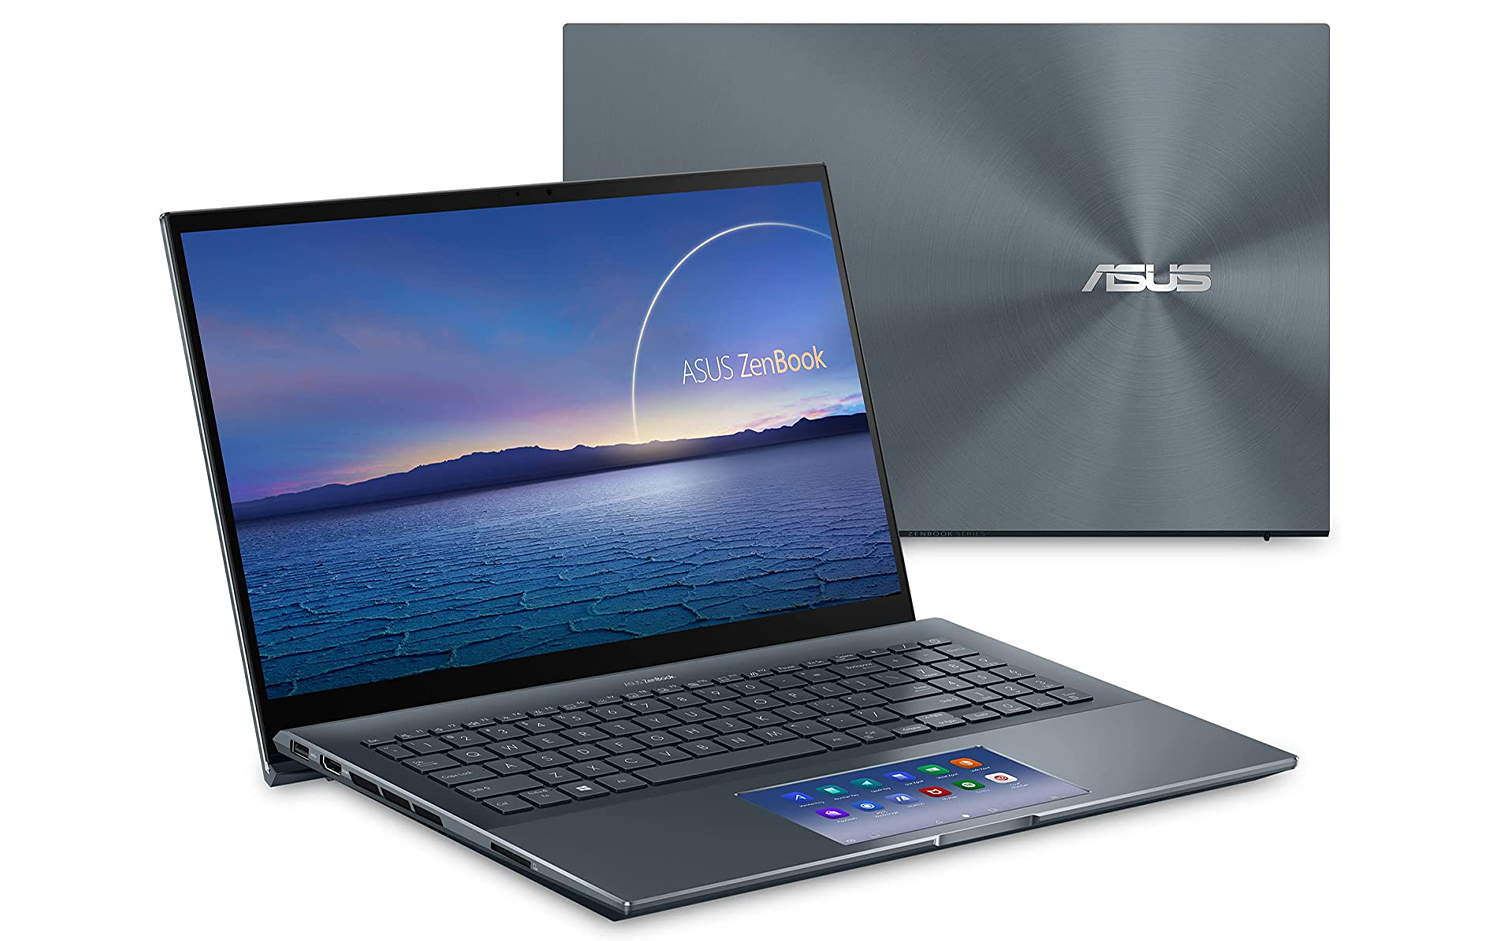 Asus Zenbook UX535 Intel Core i7 10th Gen 16GB RAM 256 SSD + 1TB HDD Windows 10 Pro Nvidia GeForce GTX 1650